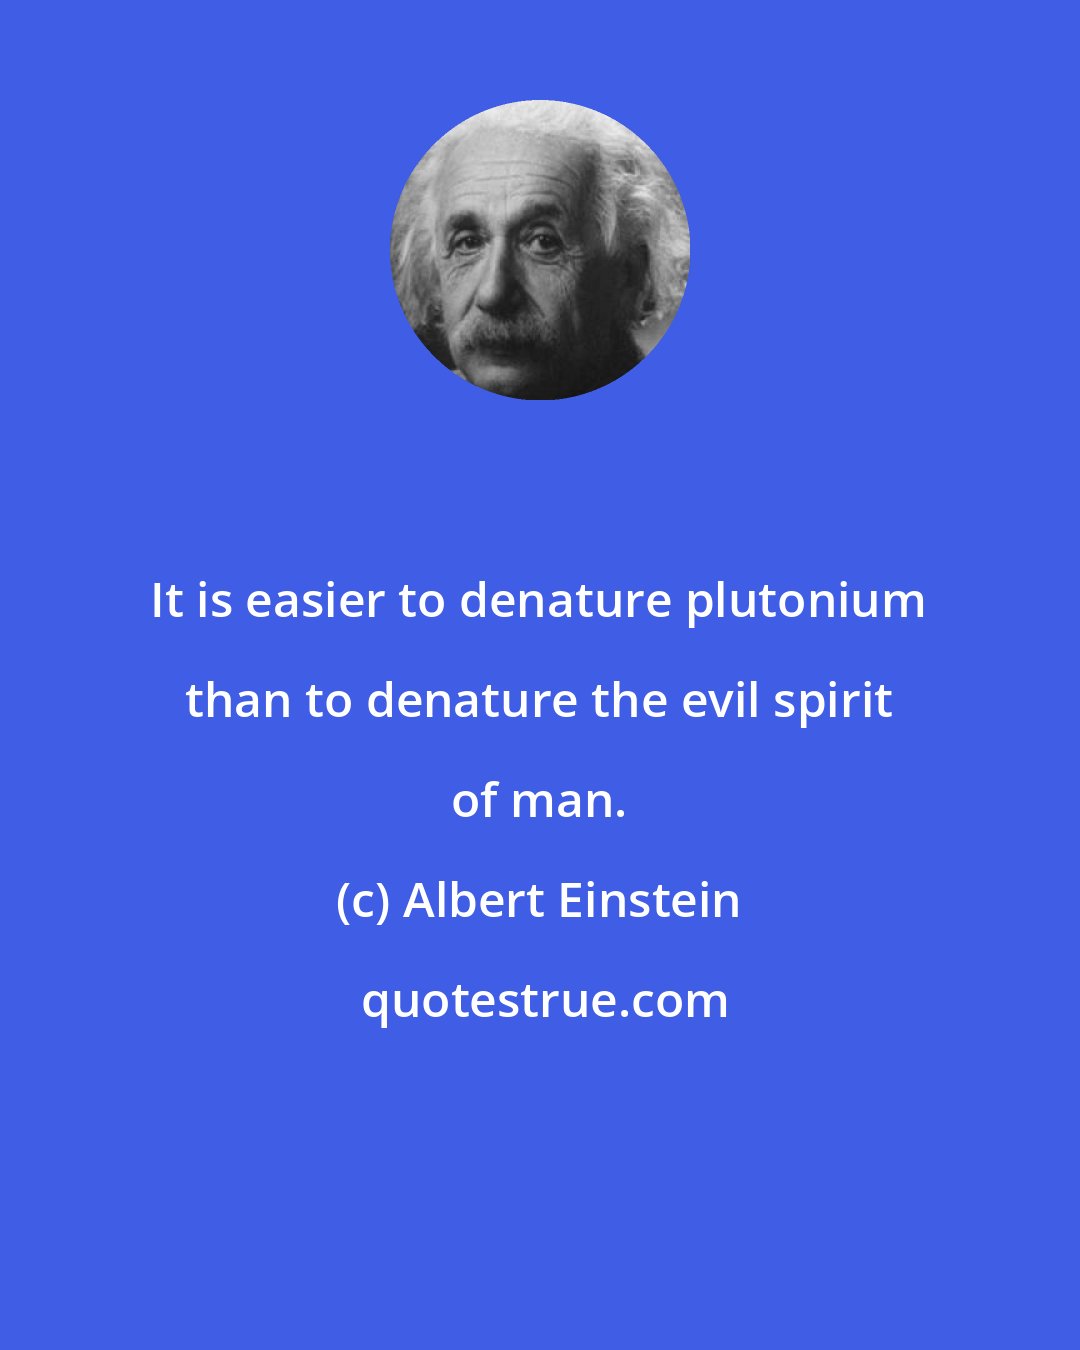 Albert Einstein: It is easier to denature plutonium than to denature the evil spirit of man.